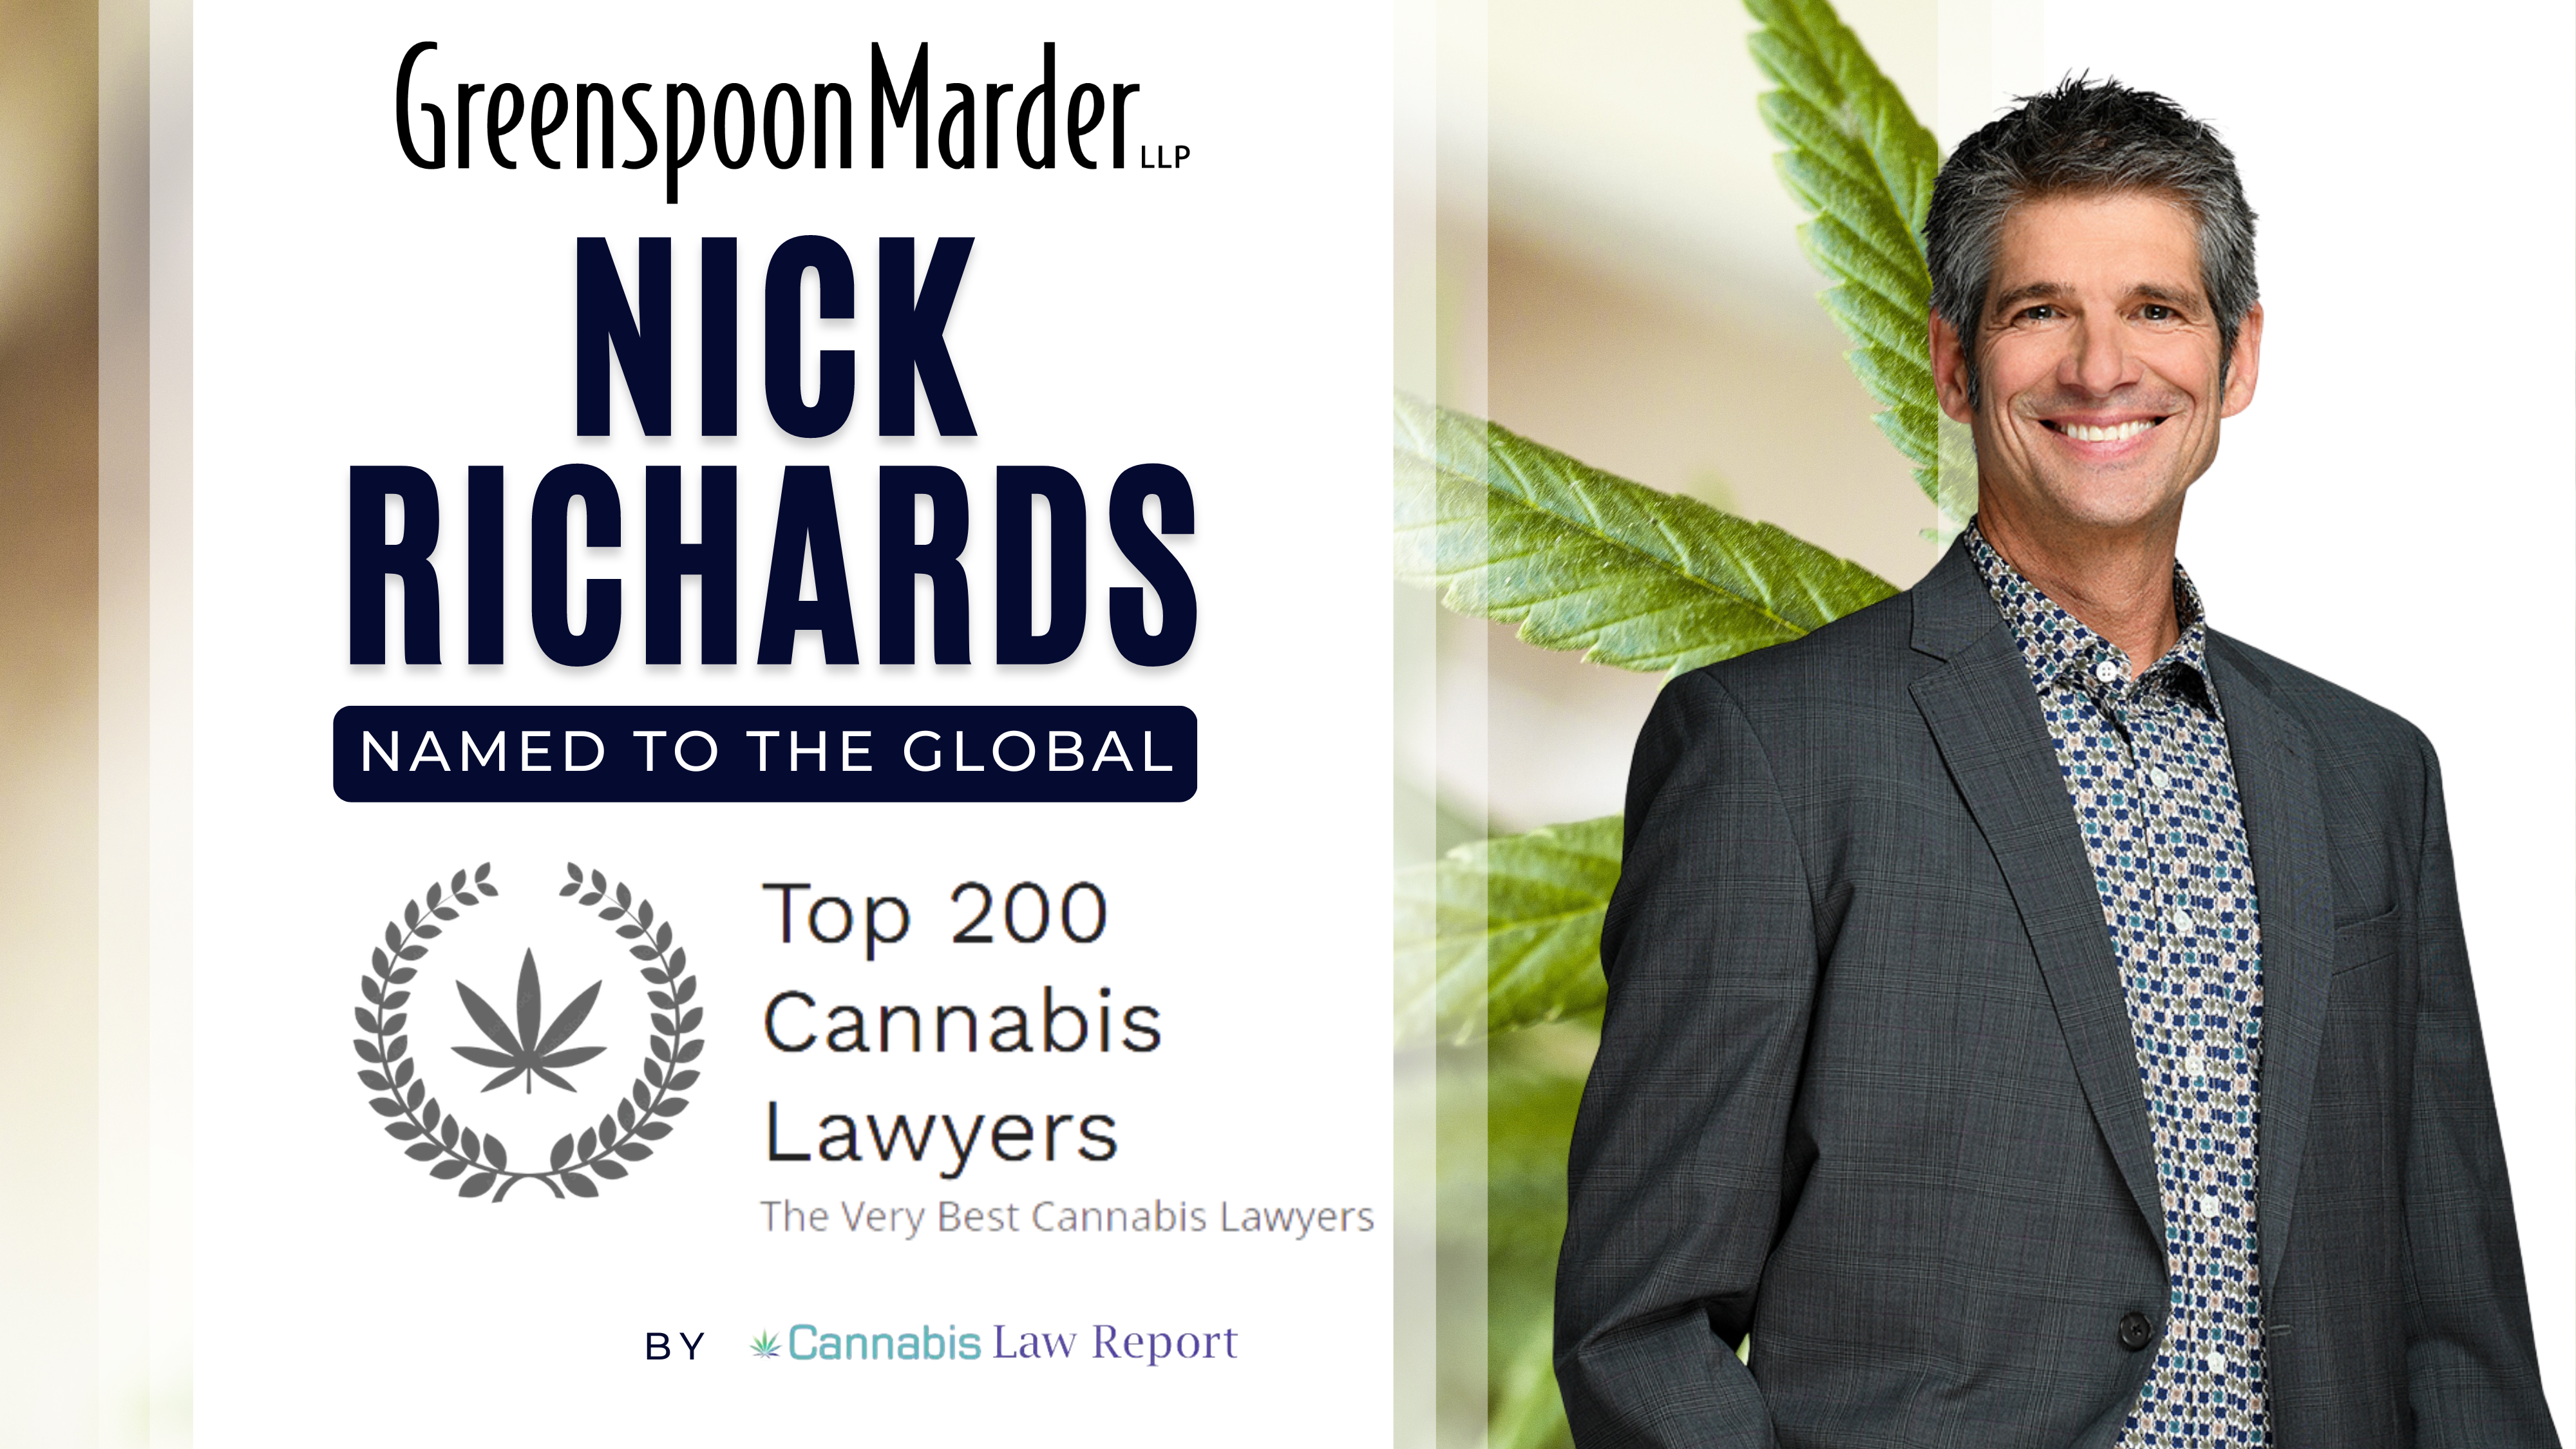 Top Cannabis Lawyer Nick Richards